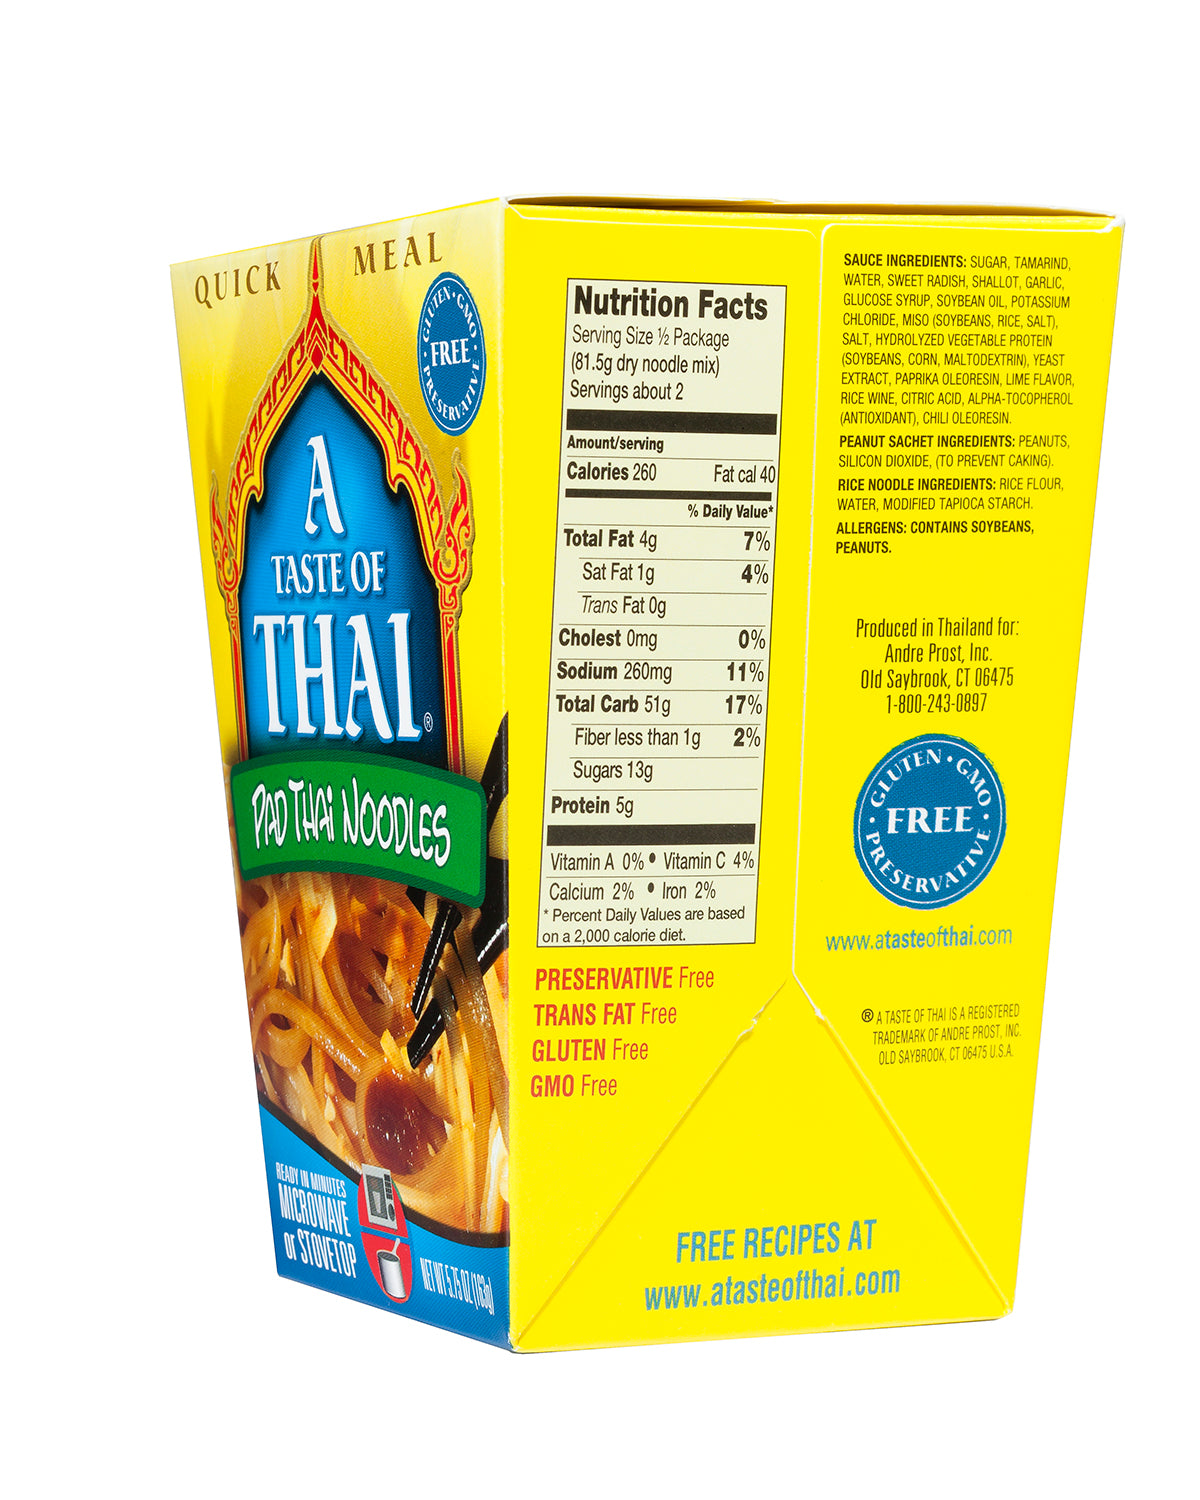 A Taste Of Thai - Pad Thai Noodles Quick Meal / 6 Pack